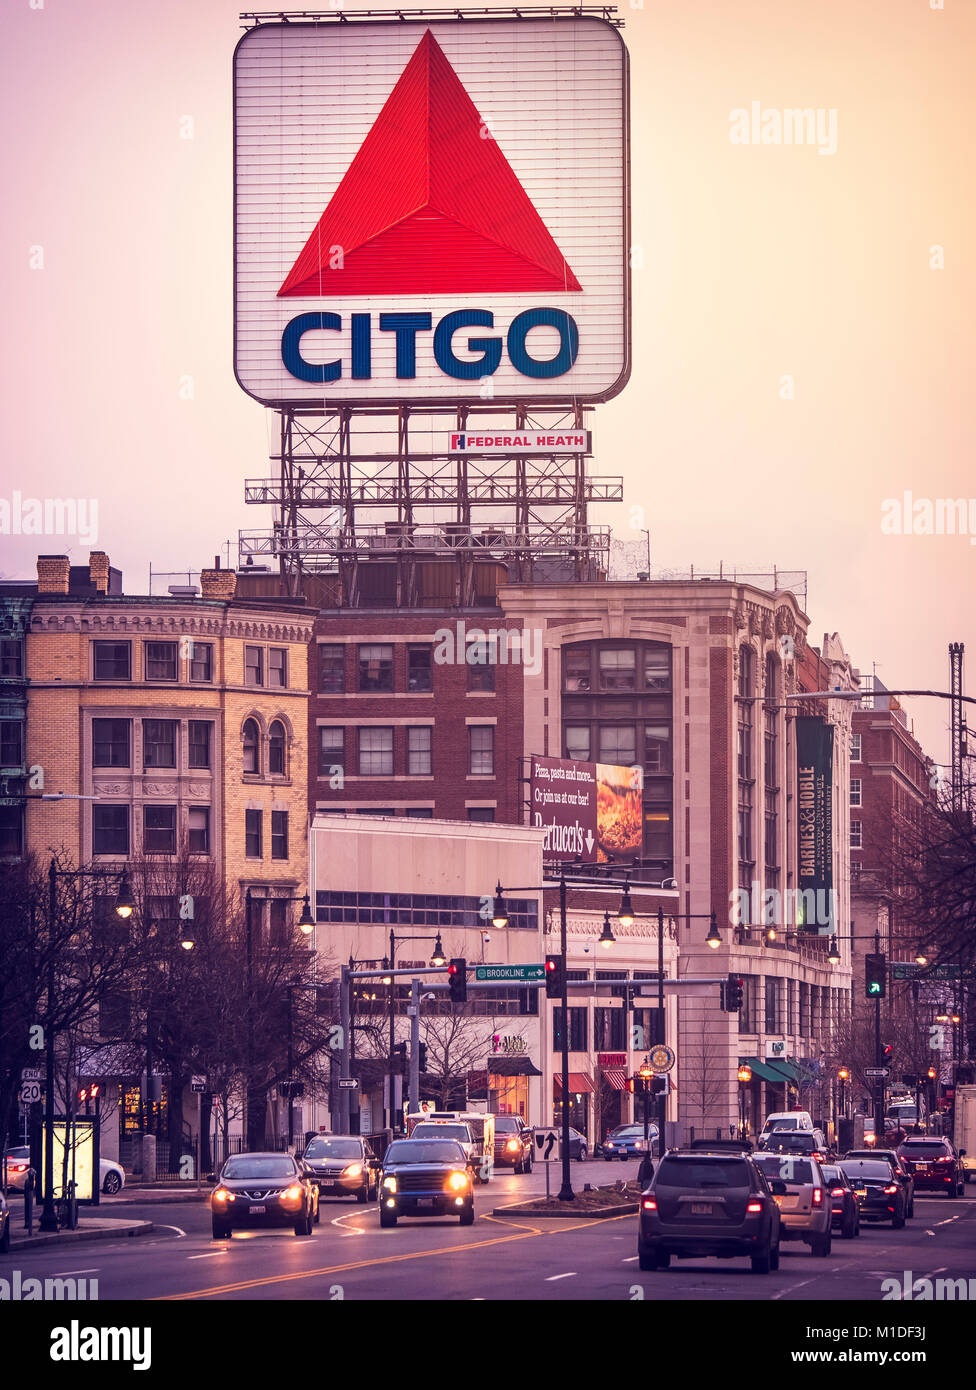 Boston in MA, USA with its CitGo sign landmark. Stock Photo